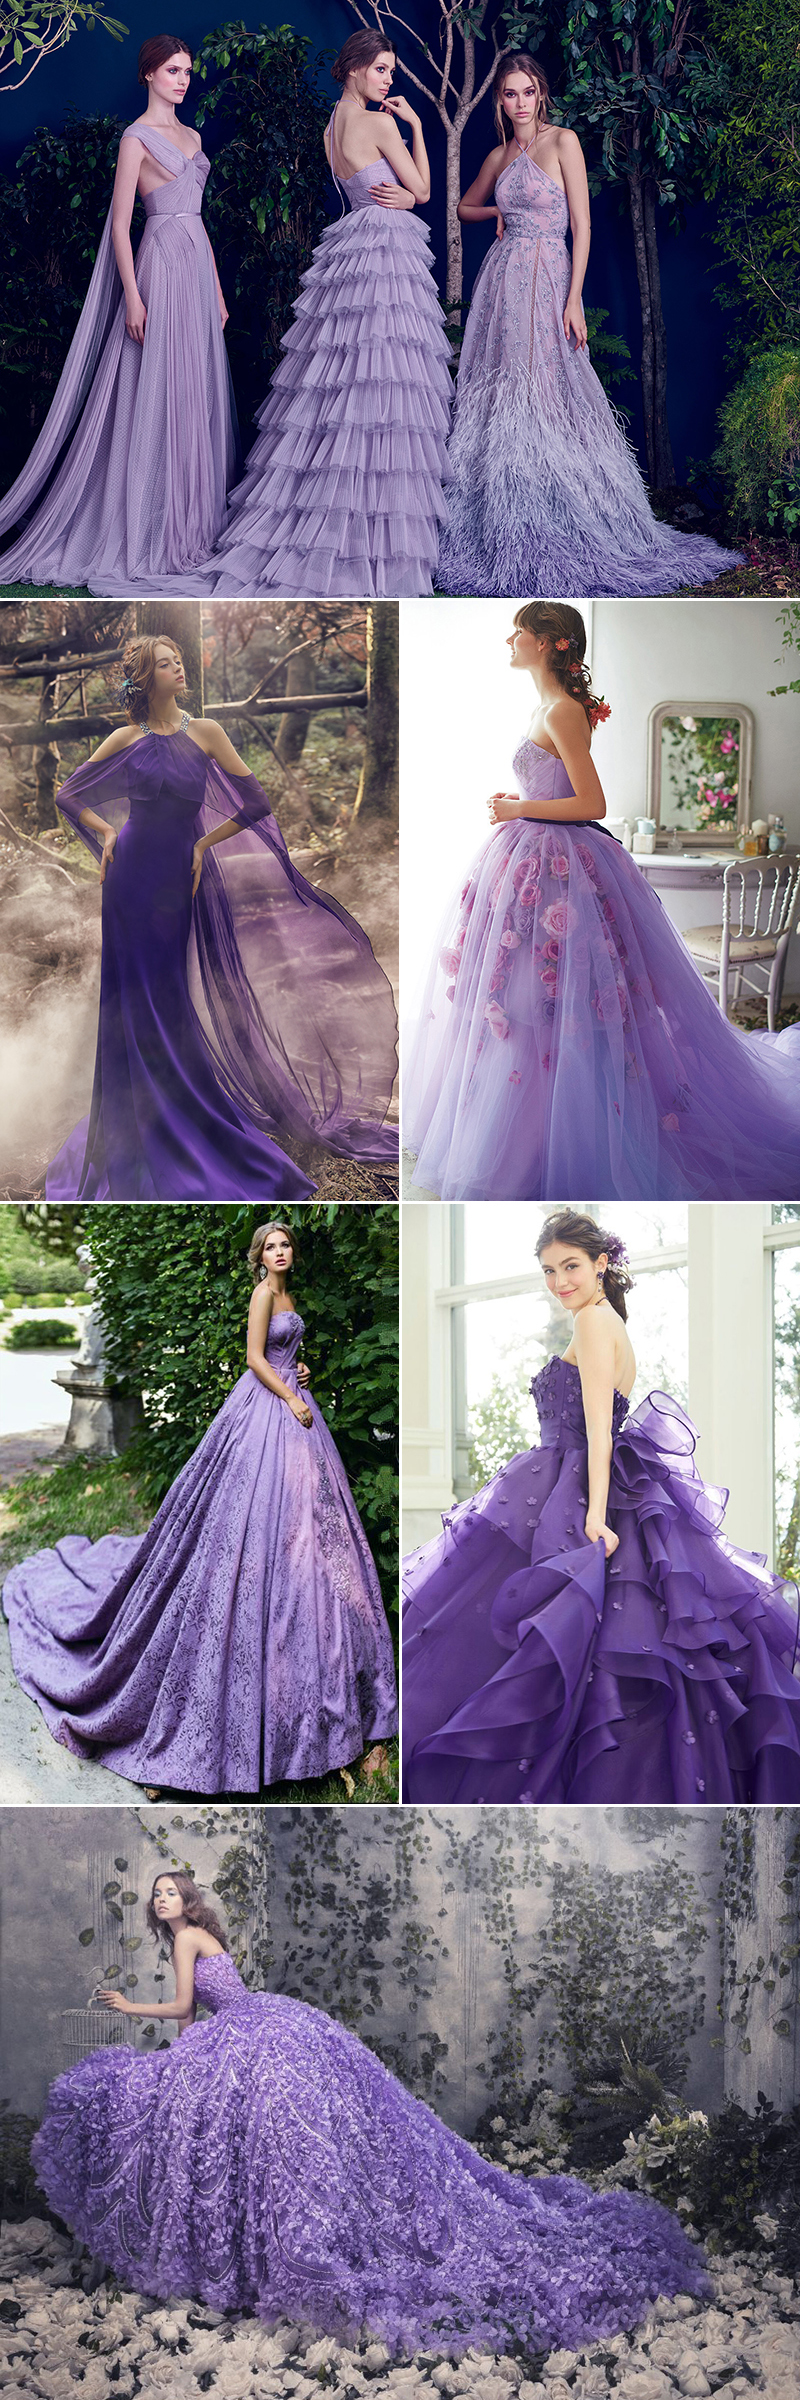 purple color wedding gown